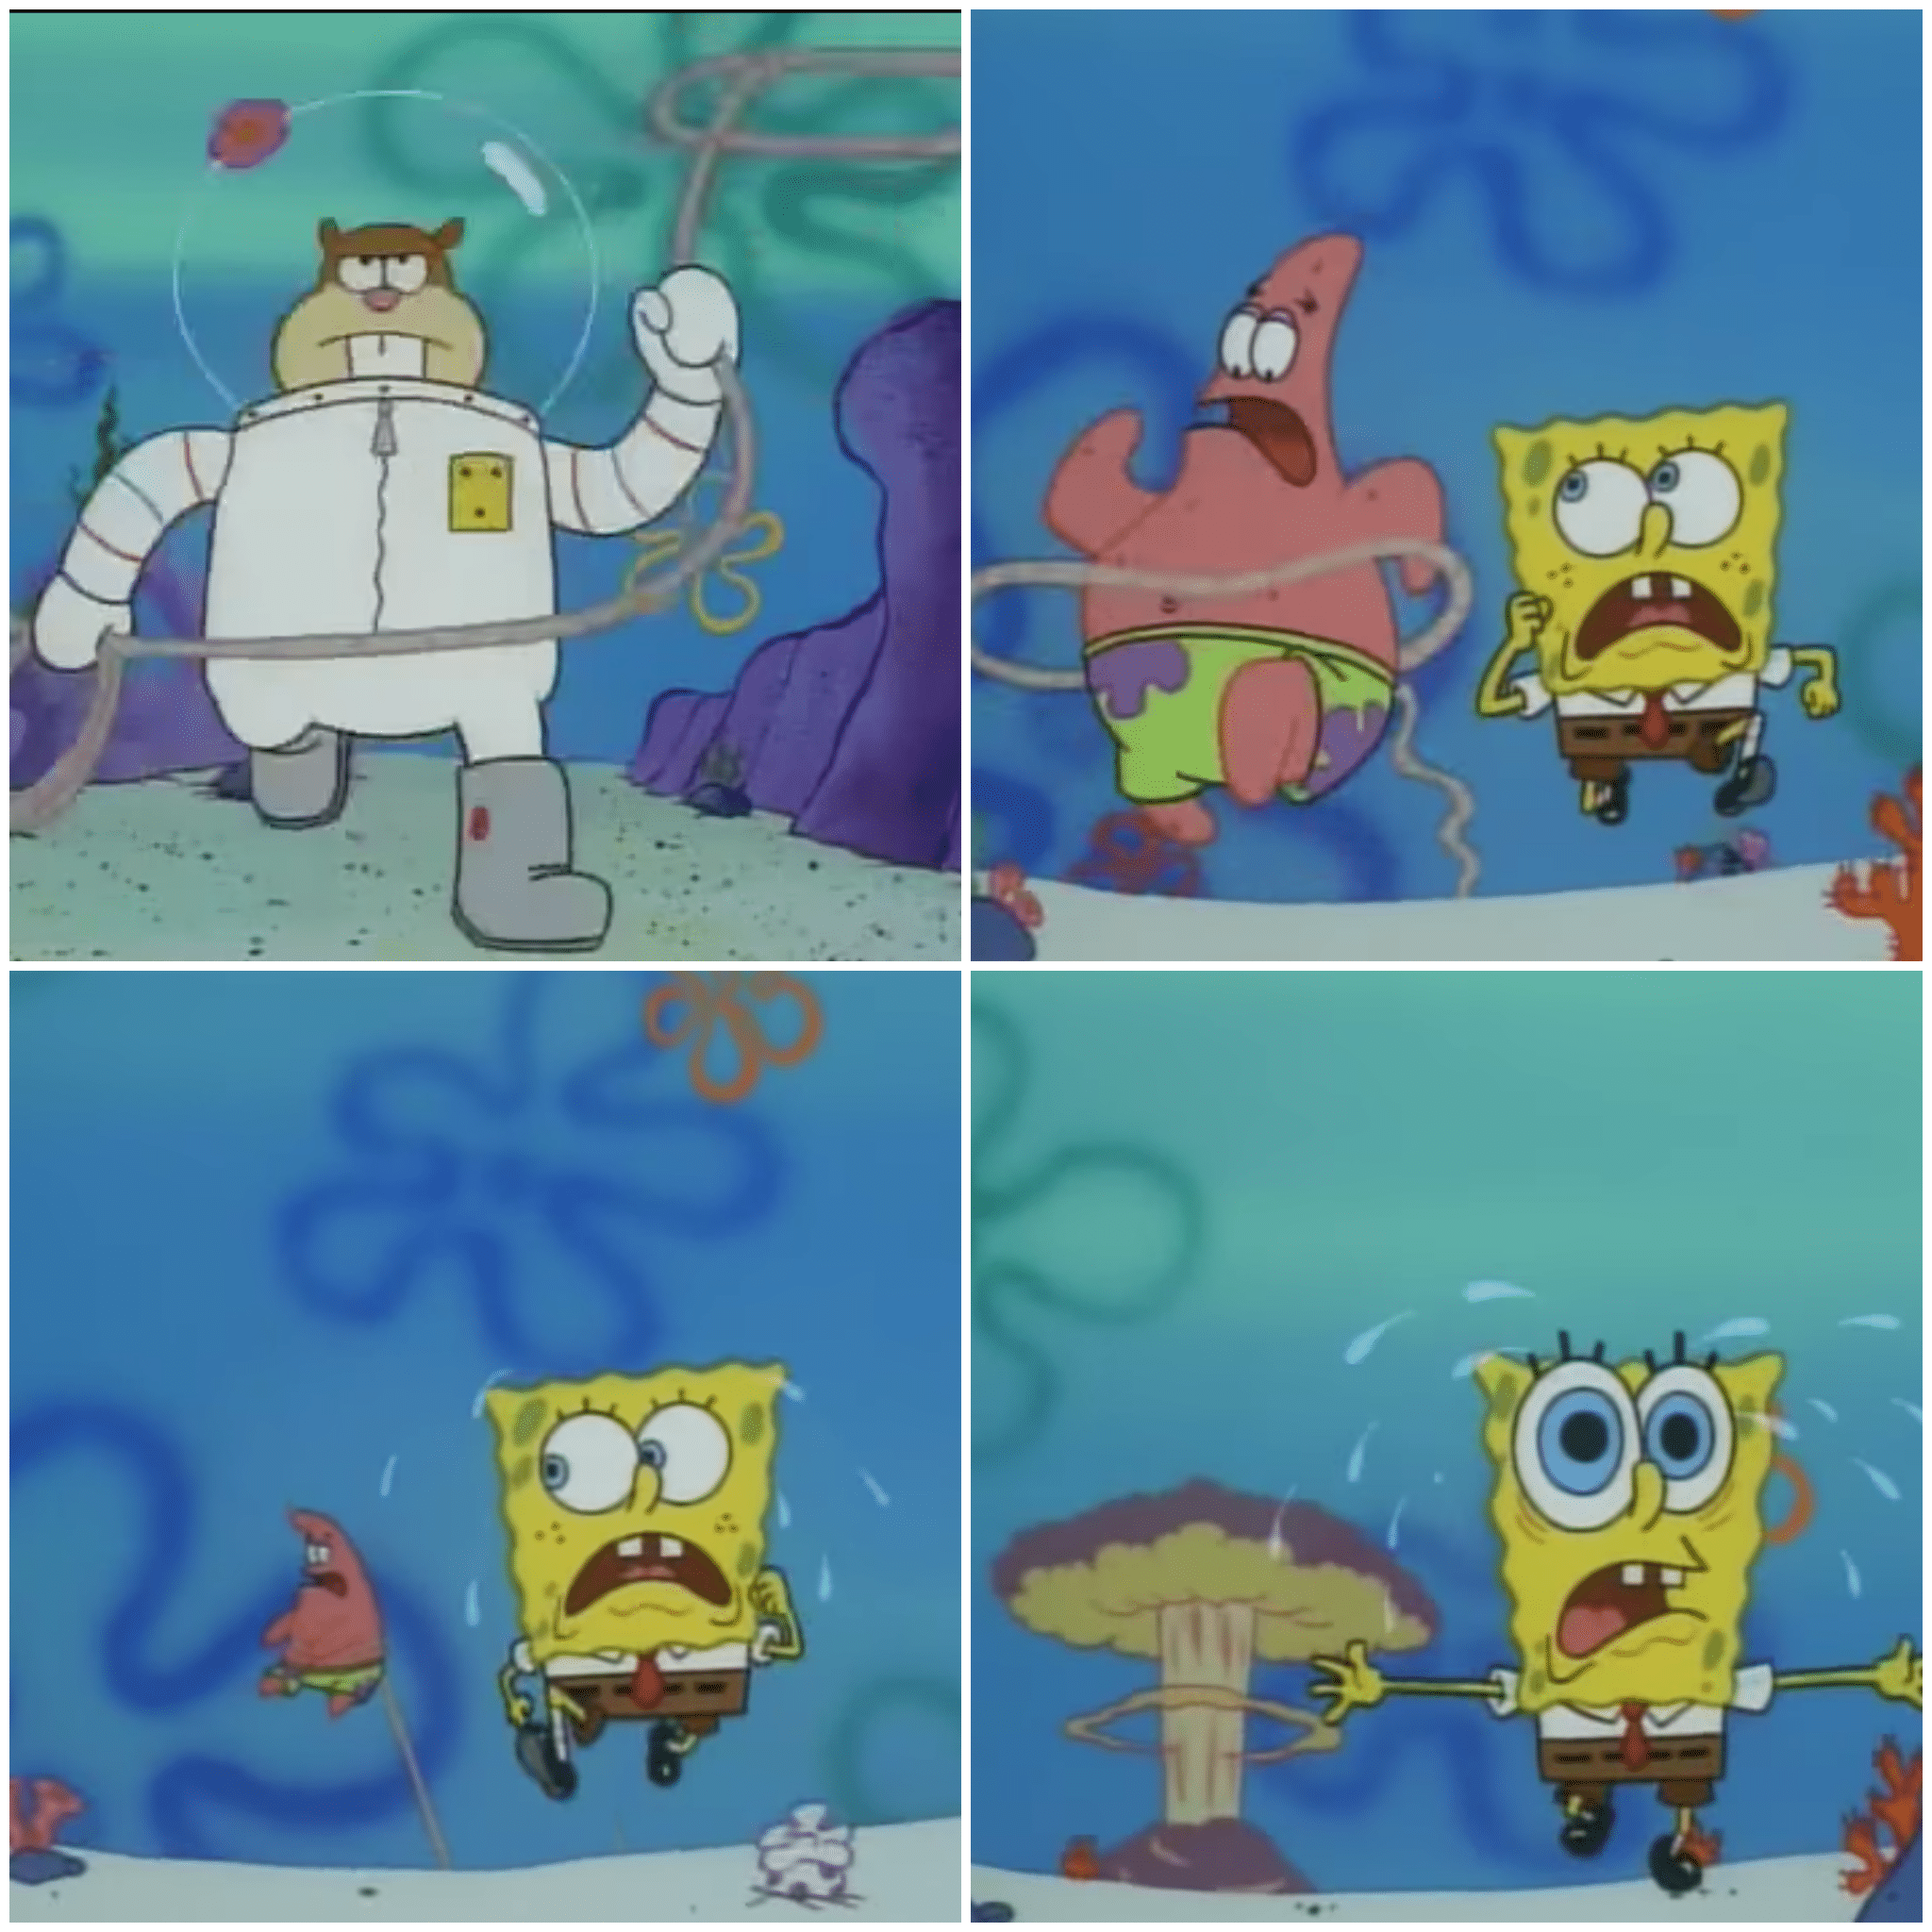 Related Spongebob meme templates.